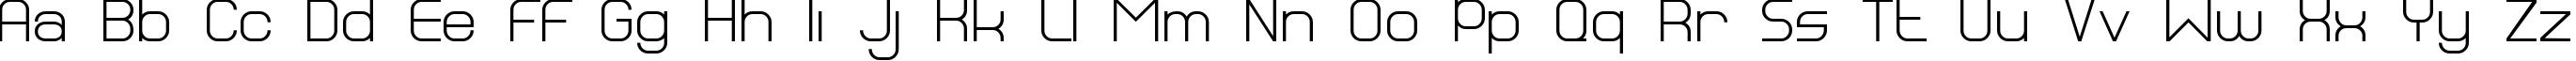 Пример написания английского алфавита шрифтом BN Dragon